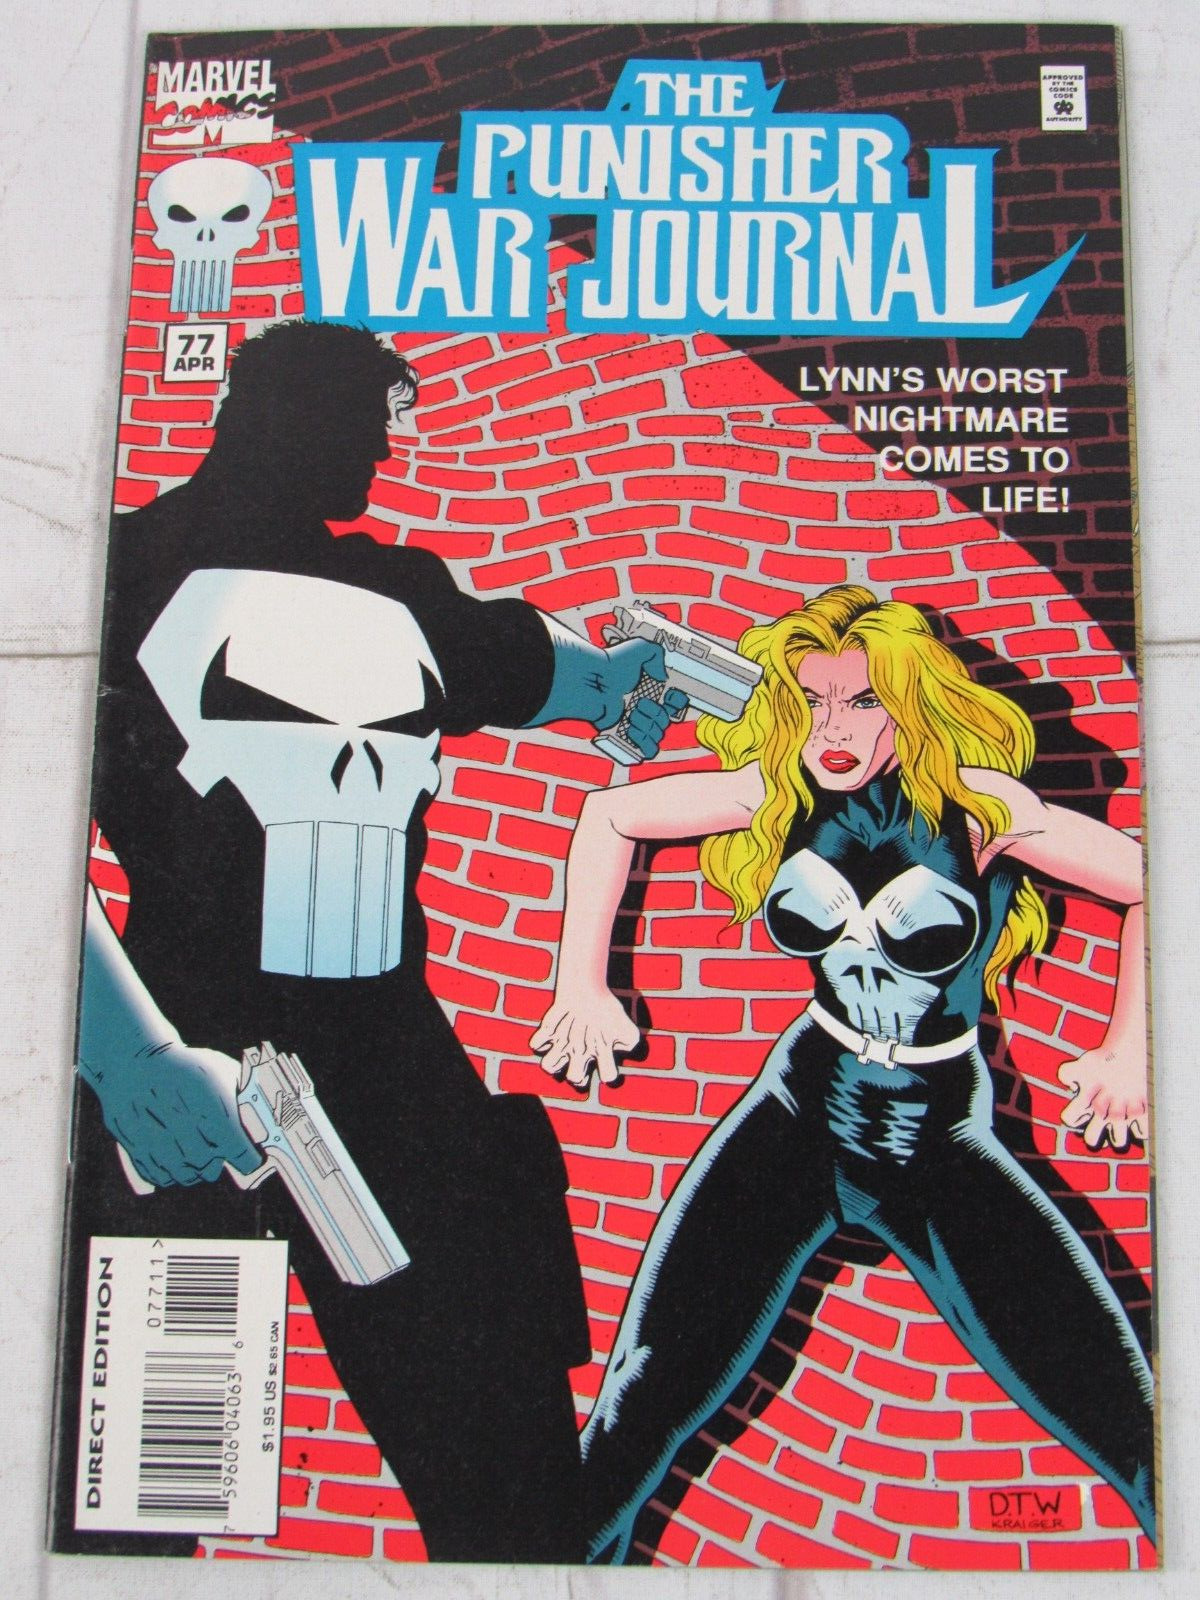 The Punisher: War Journal #77 Apr. 1995  Marvel Comics